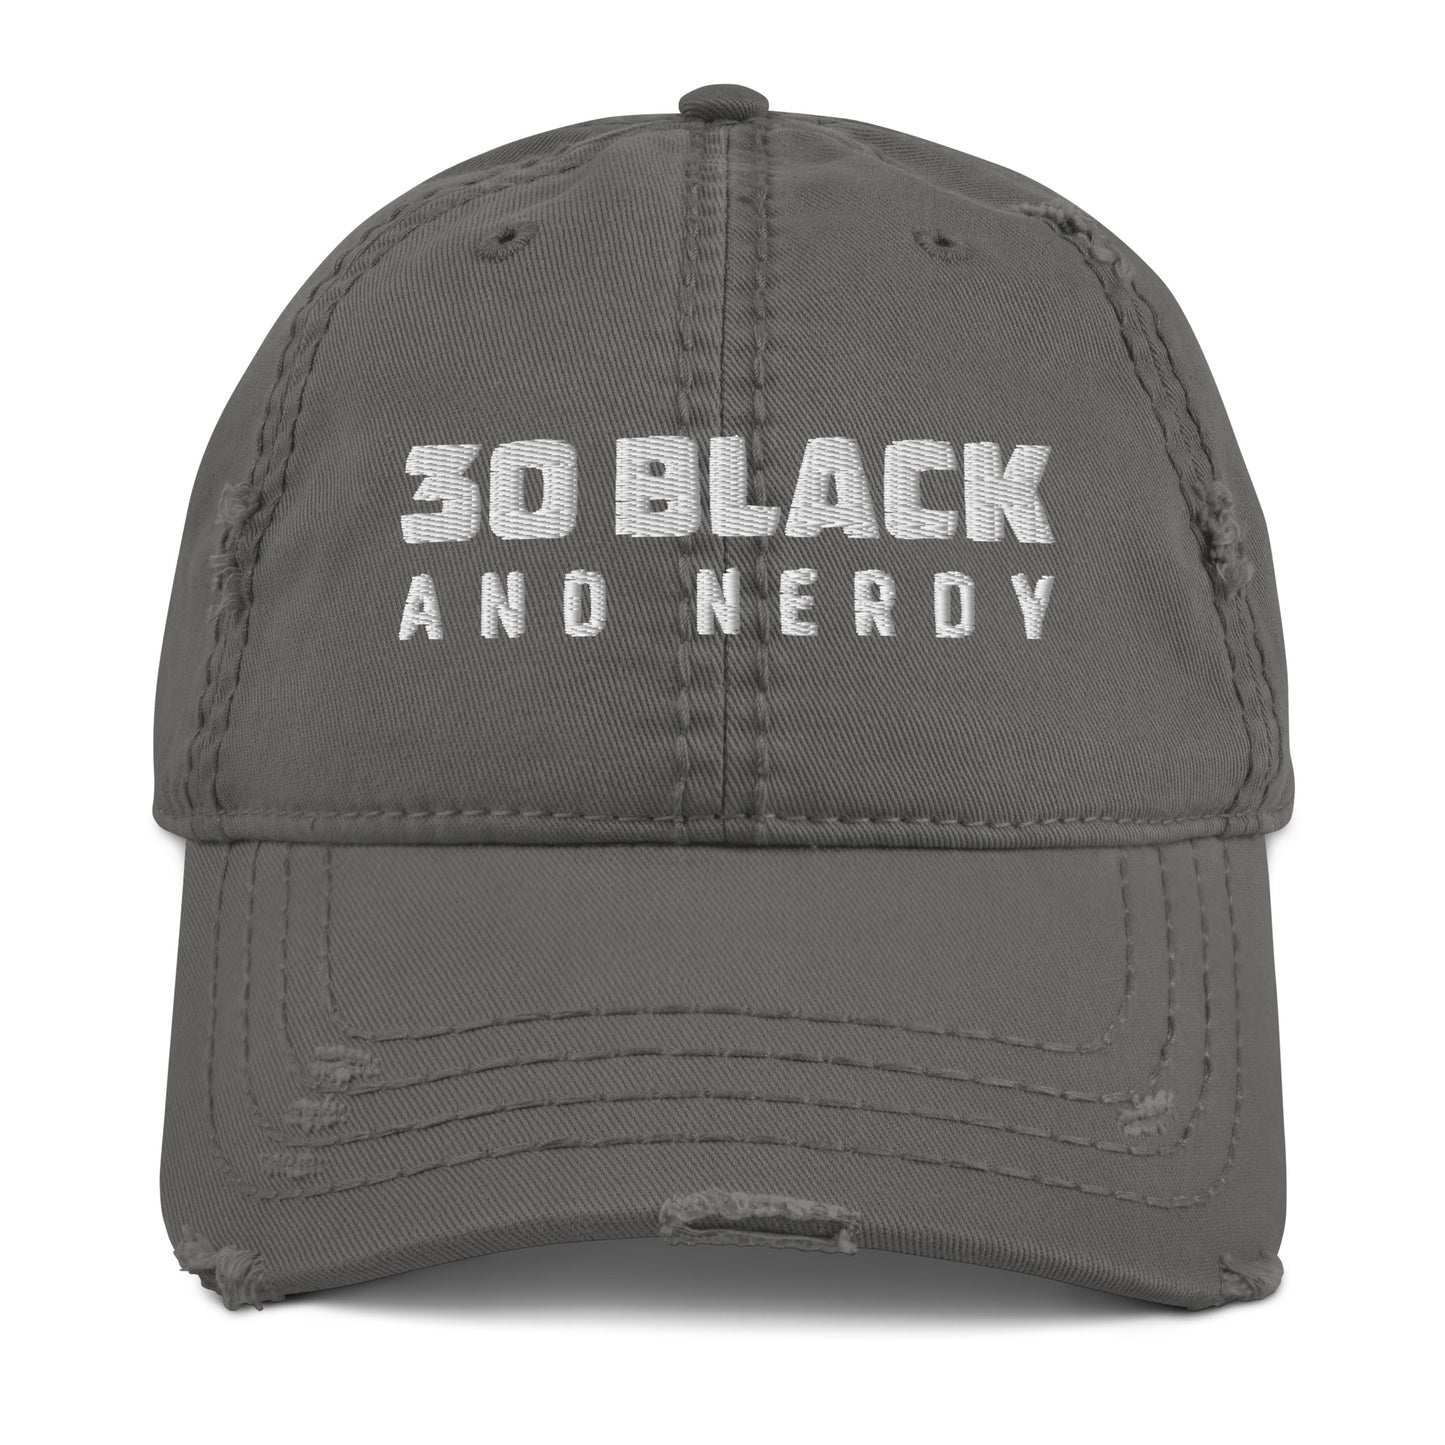 30 Black & Nerdy Distressed Hat